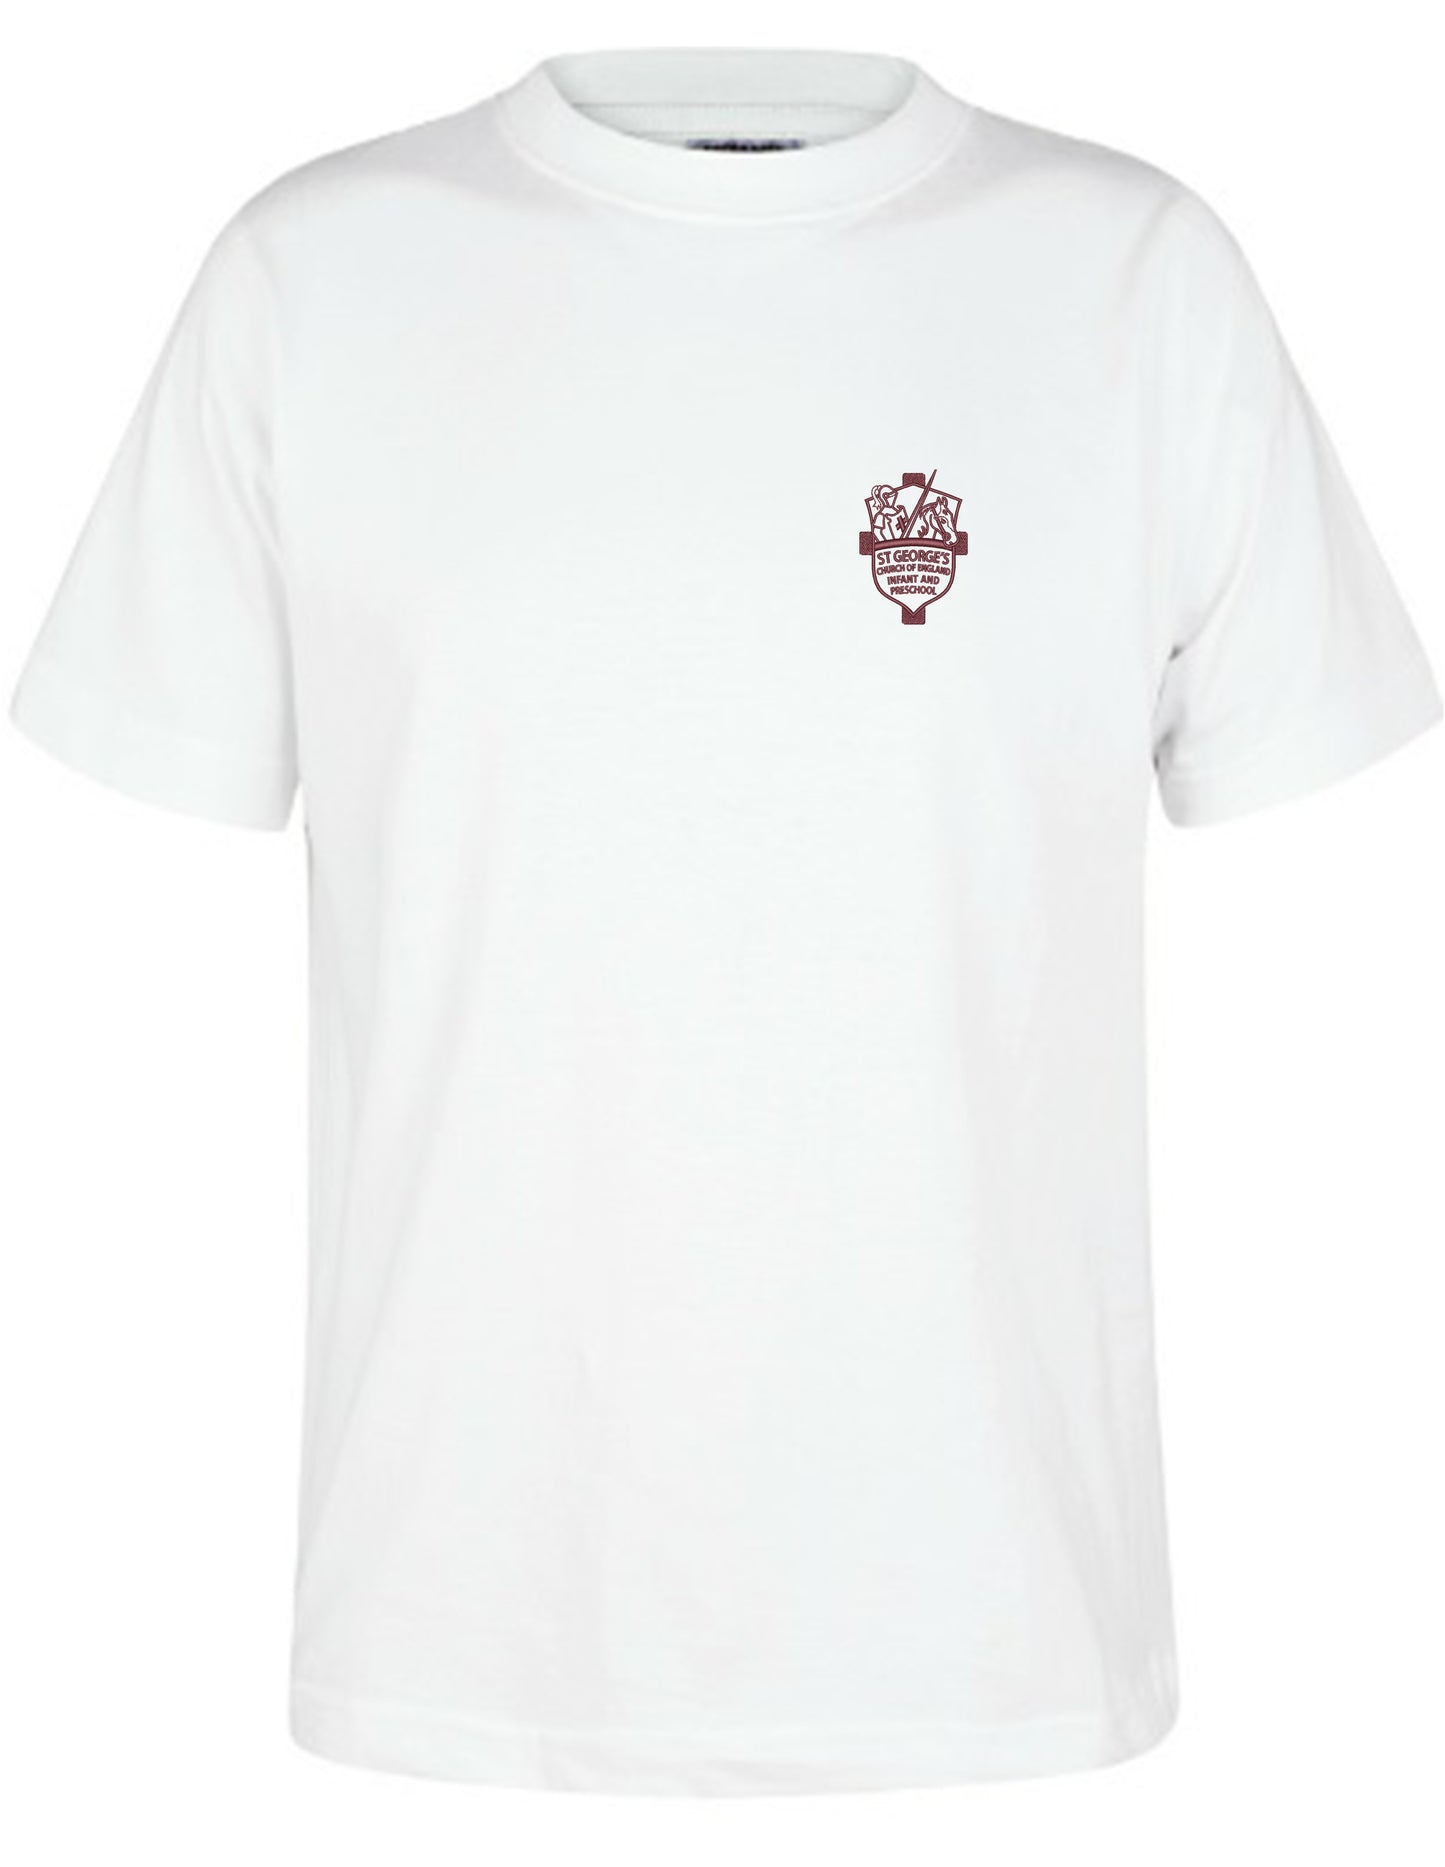 St George's C of E Infant and Preschool - Unisex Cotton T-Shirt